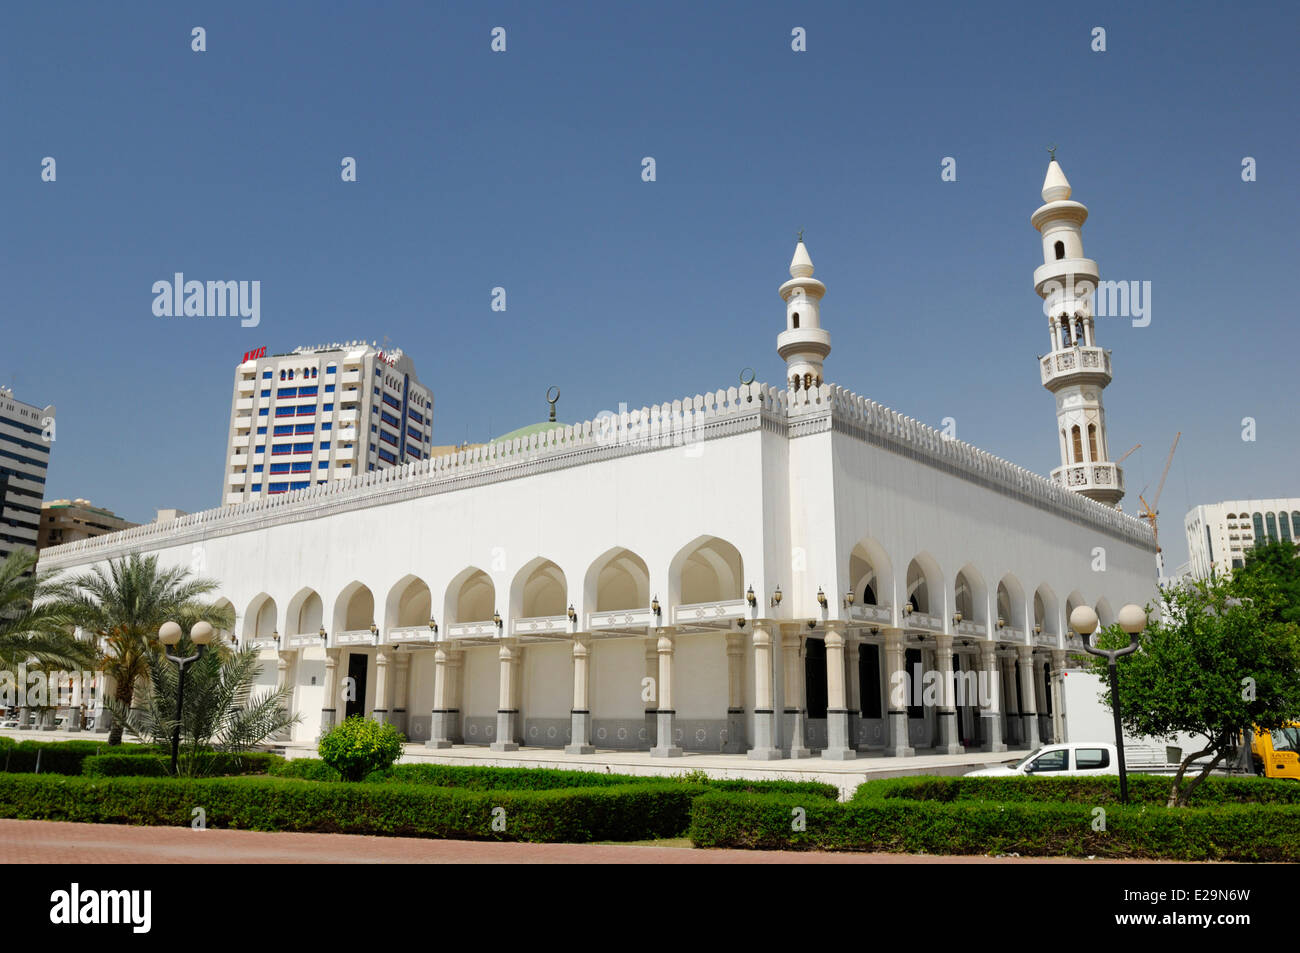 Emirati Arabi Uniti Abu Dhabi emirato, citta' di Abu Dhabi, Sheikh Khalifa moschea Foto Stock